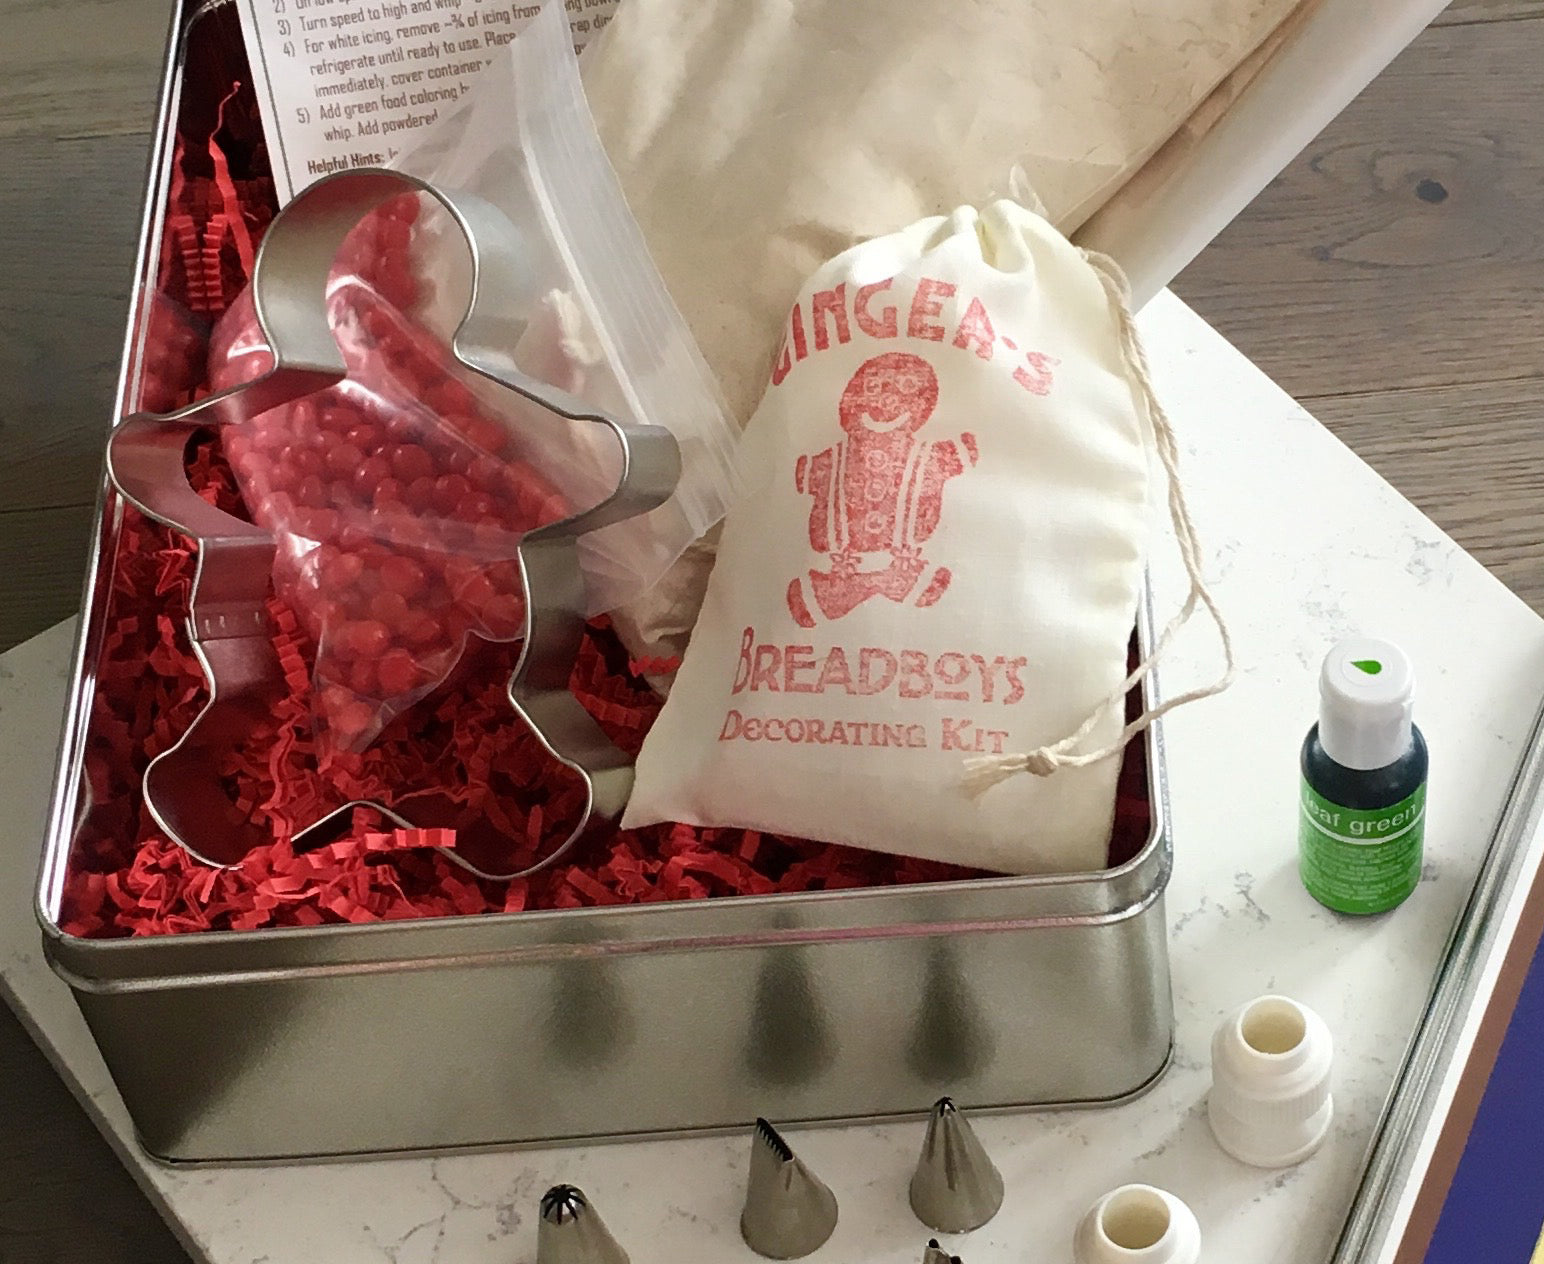 Decorating Kit | Ginger's Breadboys | DIY Gingerbread Boy Baking and Decorating Kits